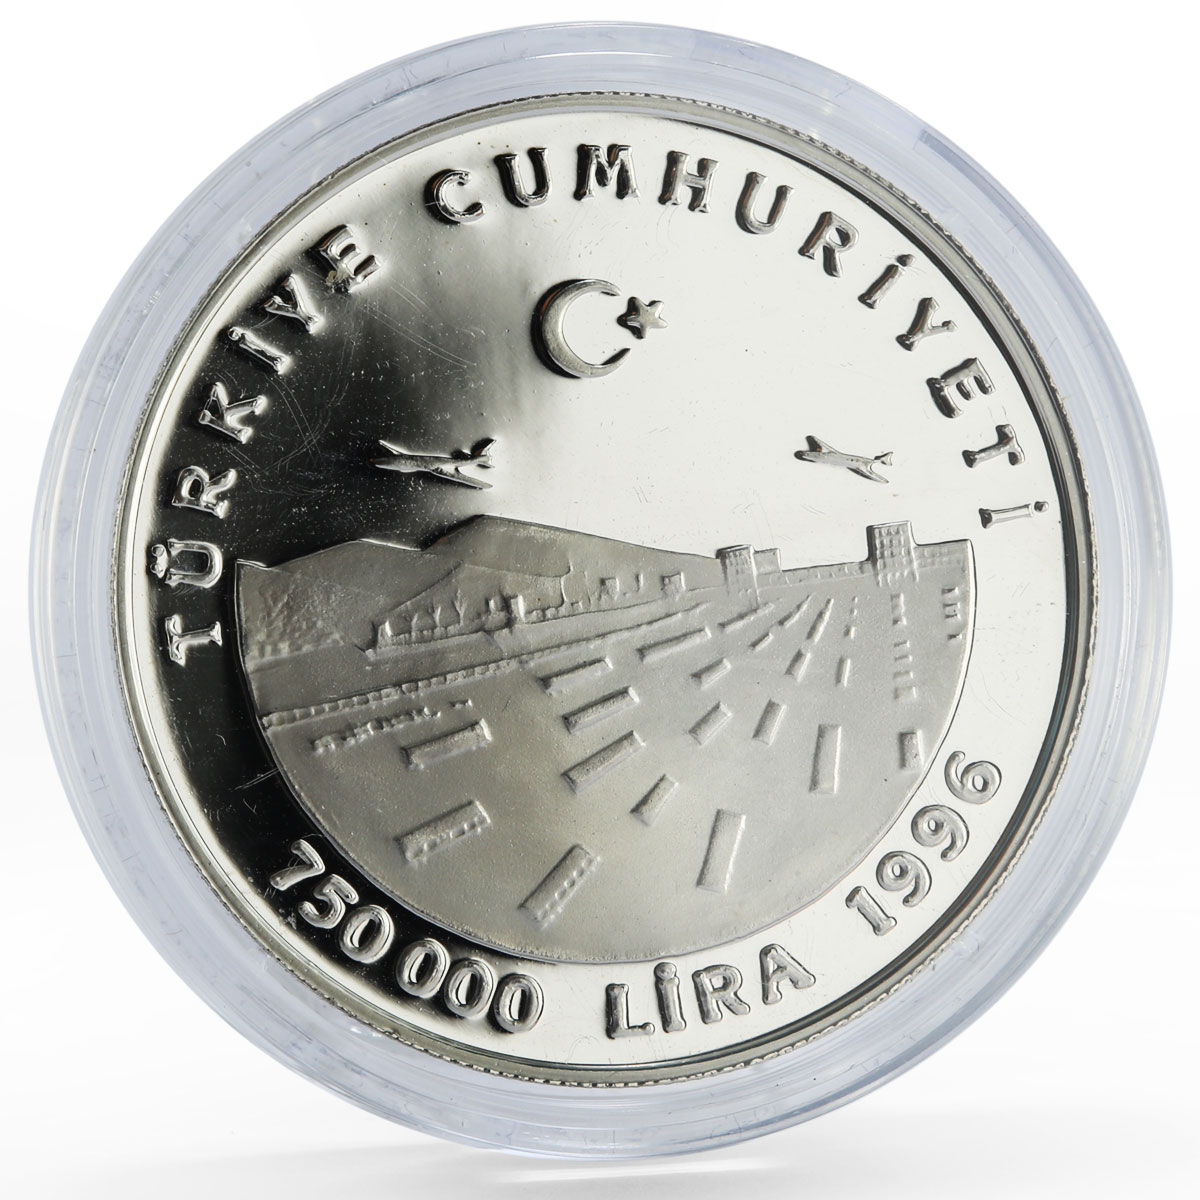 Turkey 750000 lira Custom Union Clasped Hands Planes Road proof silver coin 1996